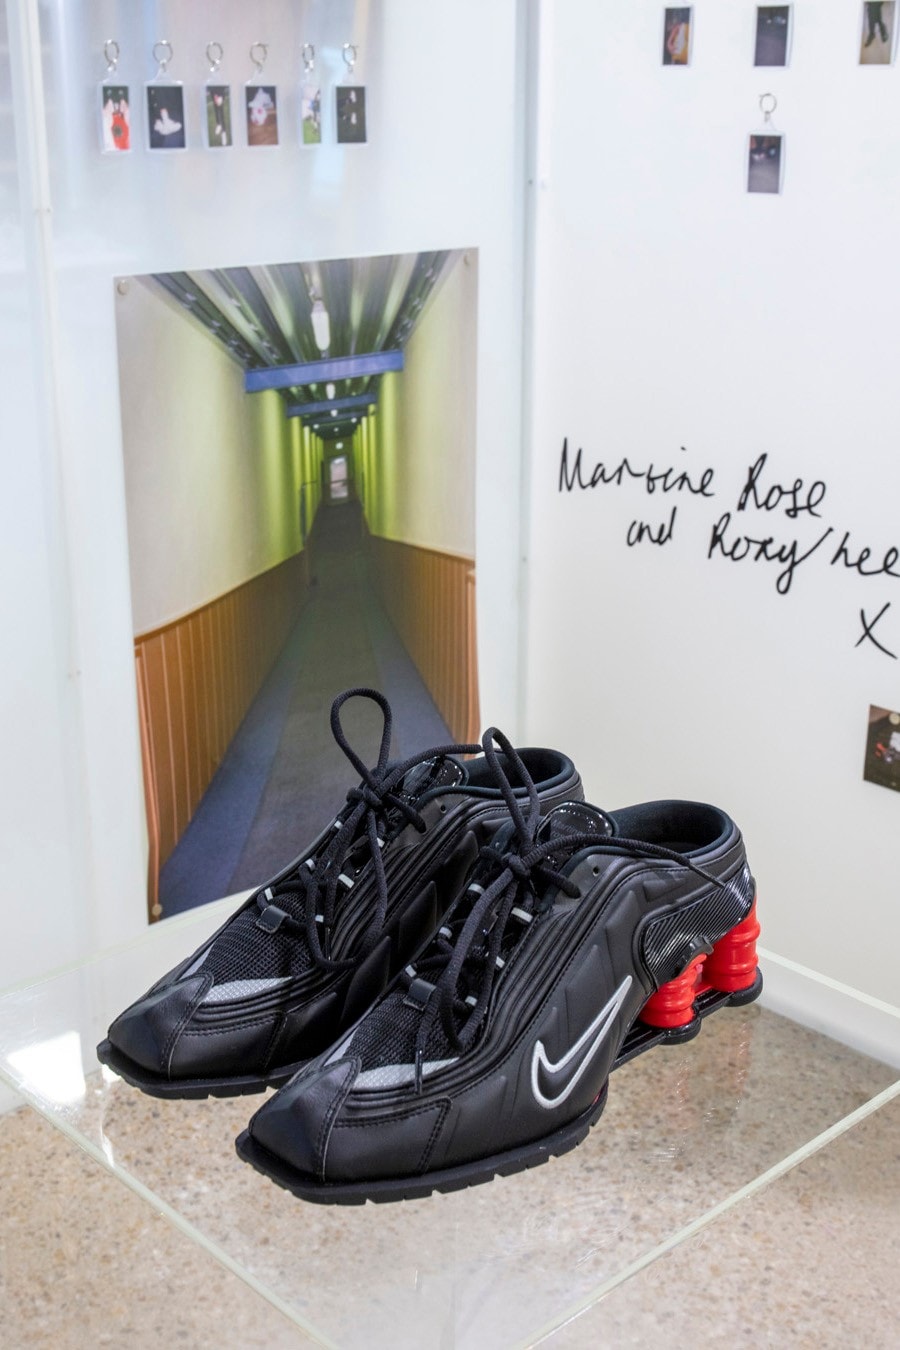 Martine Rose x Nike Shox MR4 聯乘鞋款正式登陸倫敦 Dover Street Market